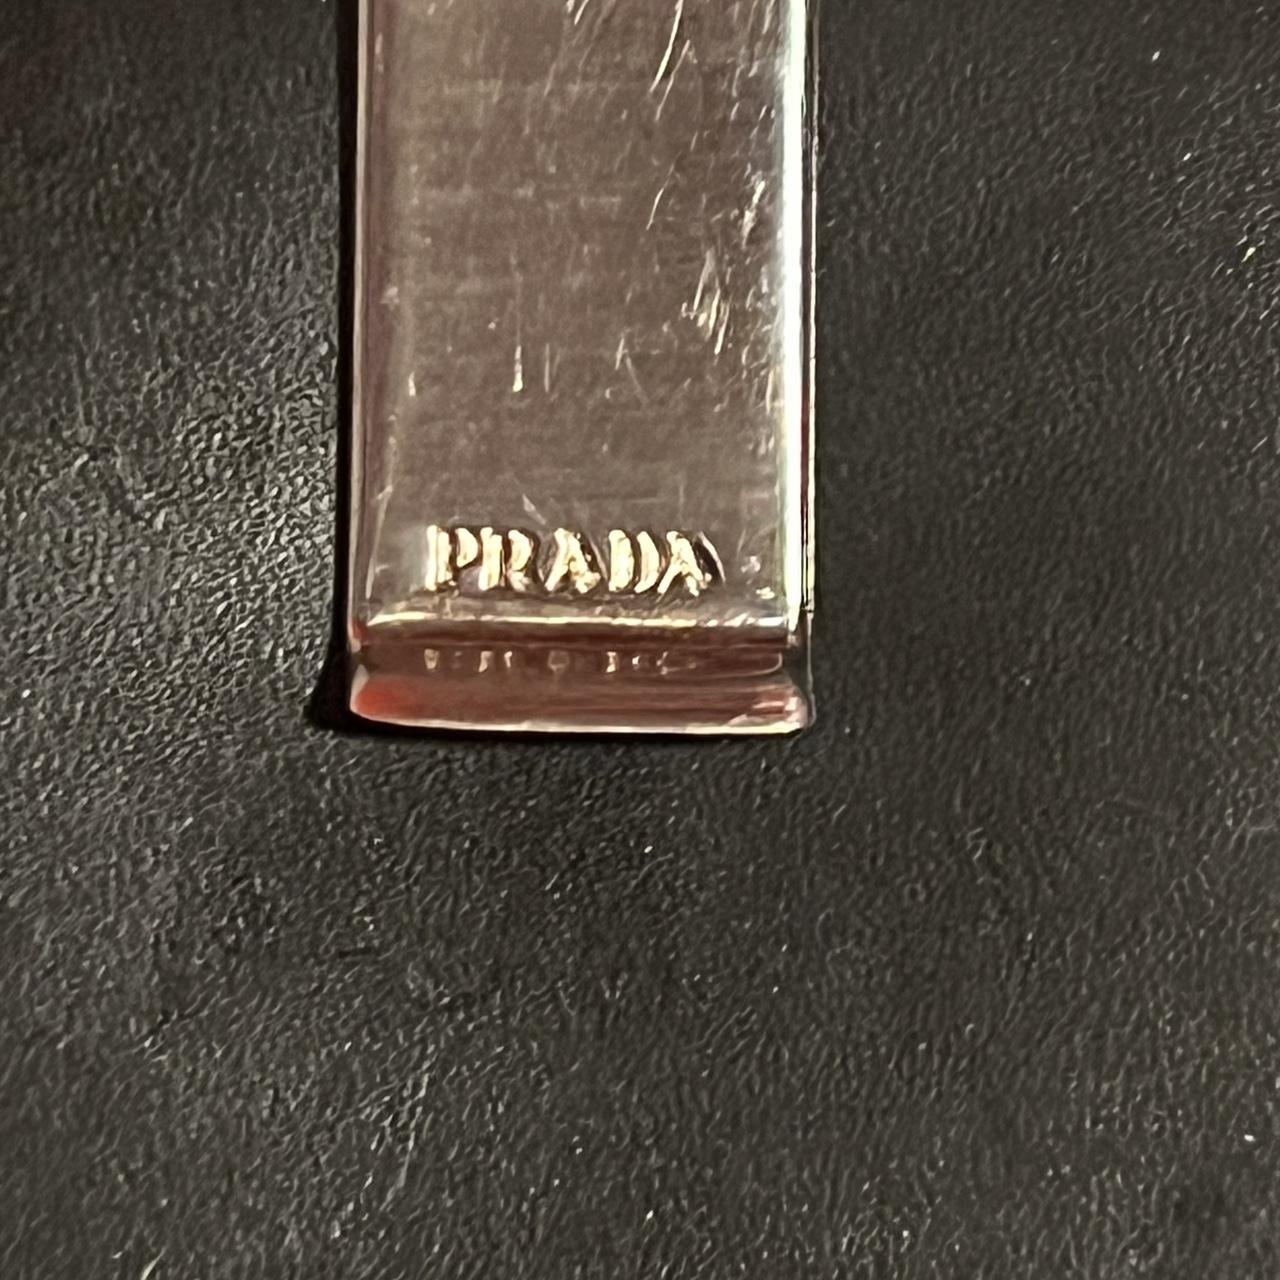 Prada Leather Passport Holder Message if interested - Depop